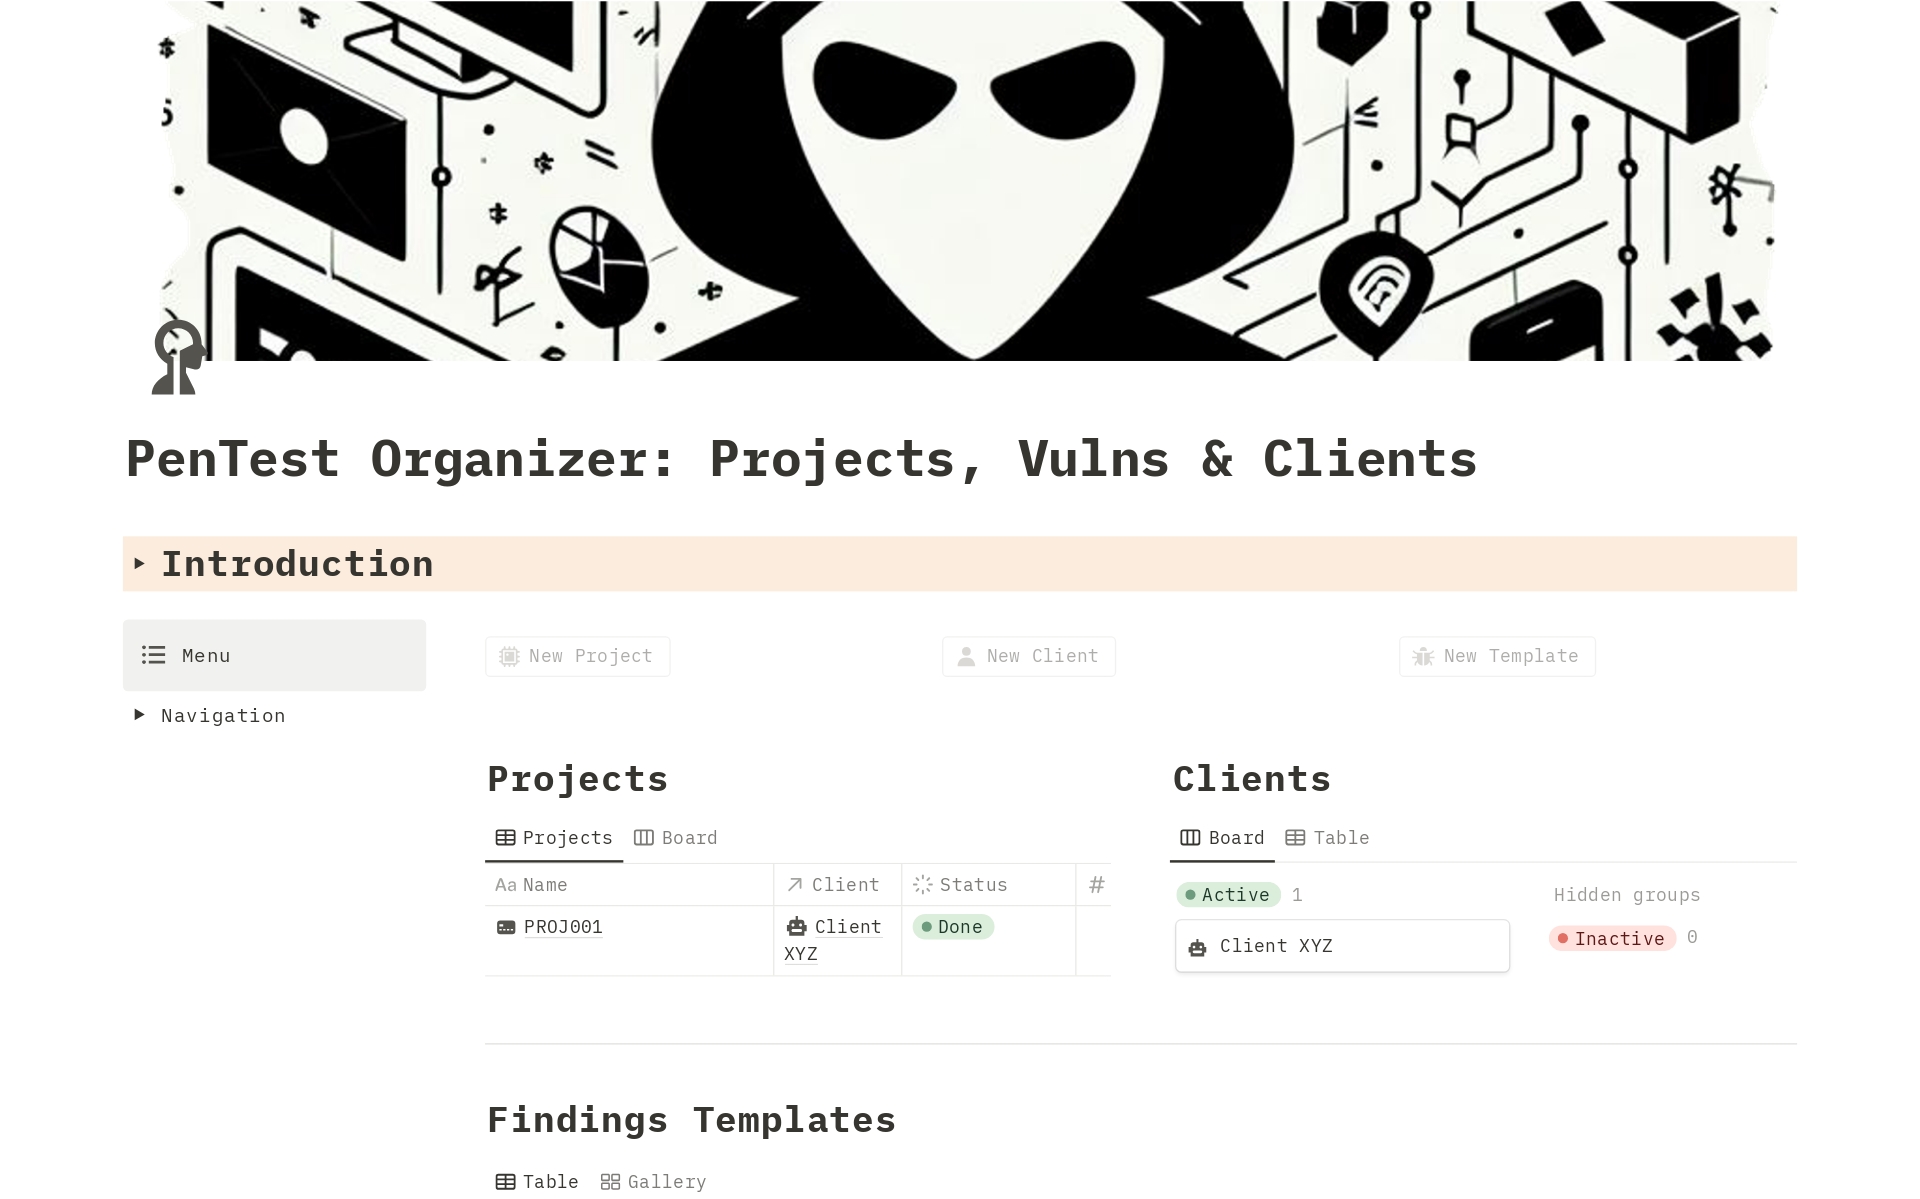 PenTest Organizer: Projects, Vulns & Clients님의 템플릿 미리보기